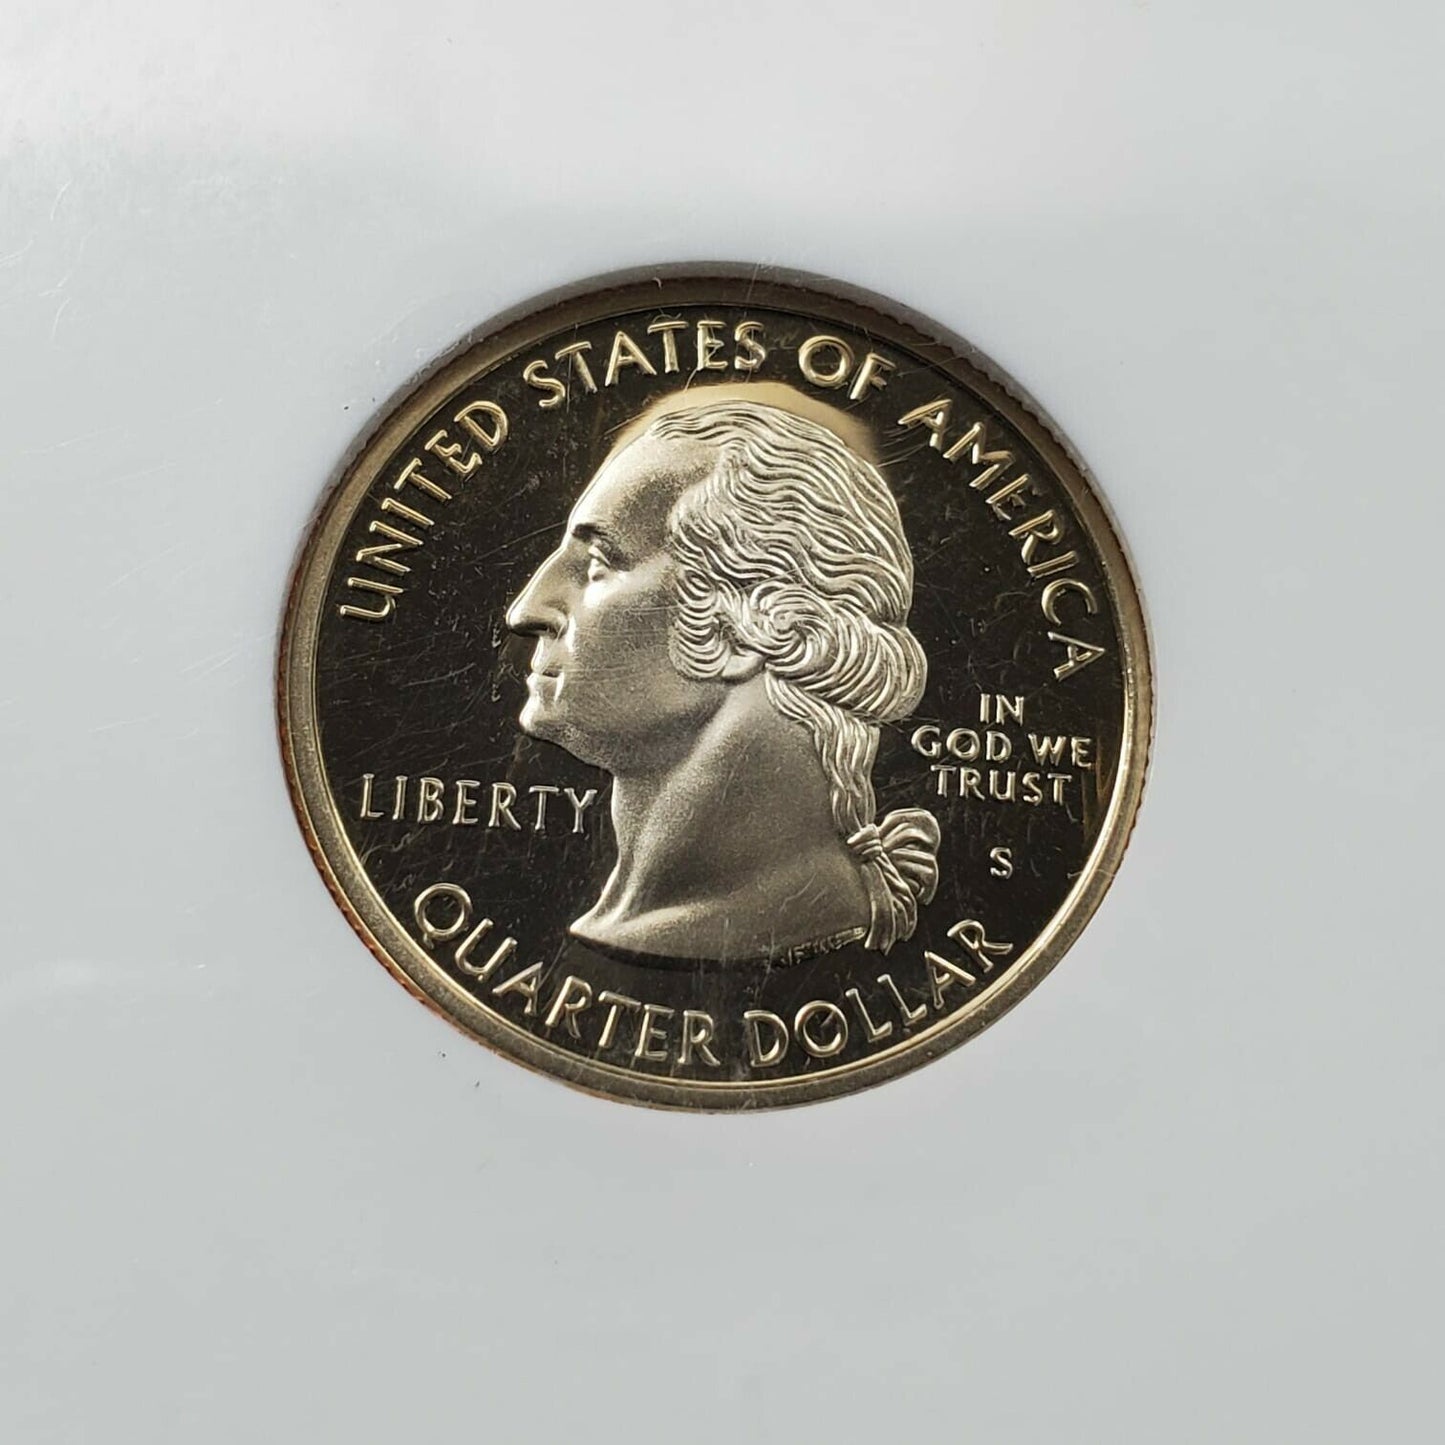 1999 S Connecticut State Statehood Quarter Coin PF69 UCAM DCAM PROOF CLAD